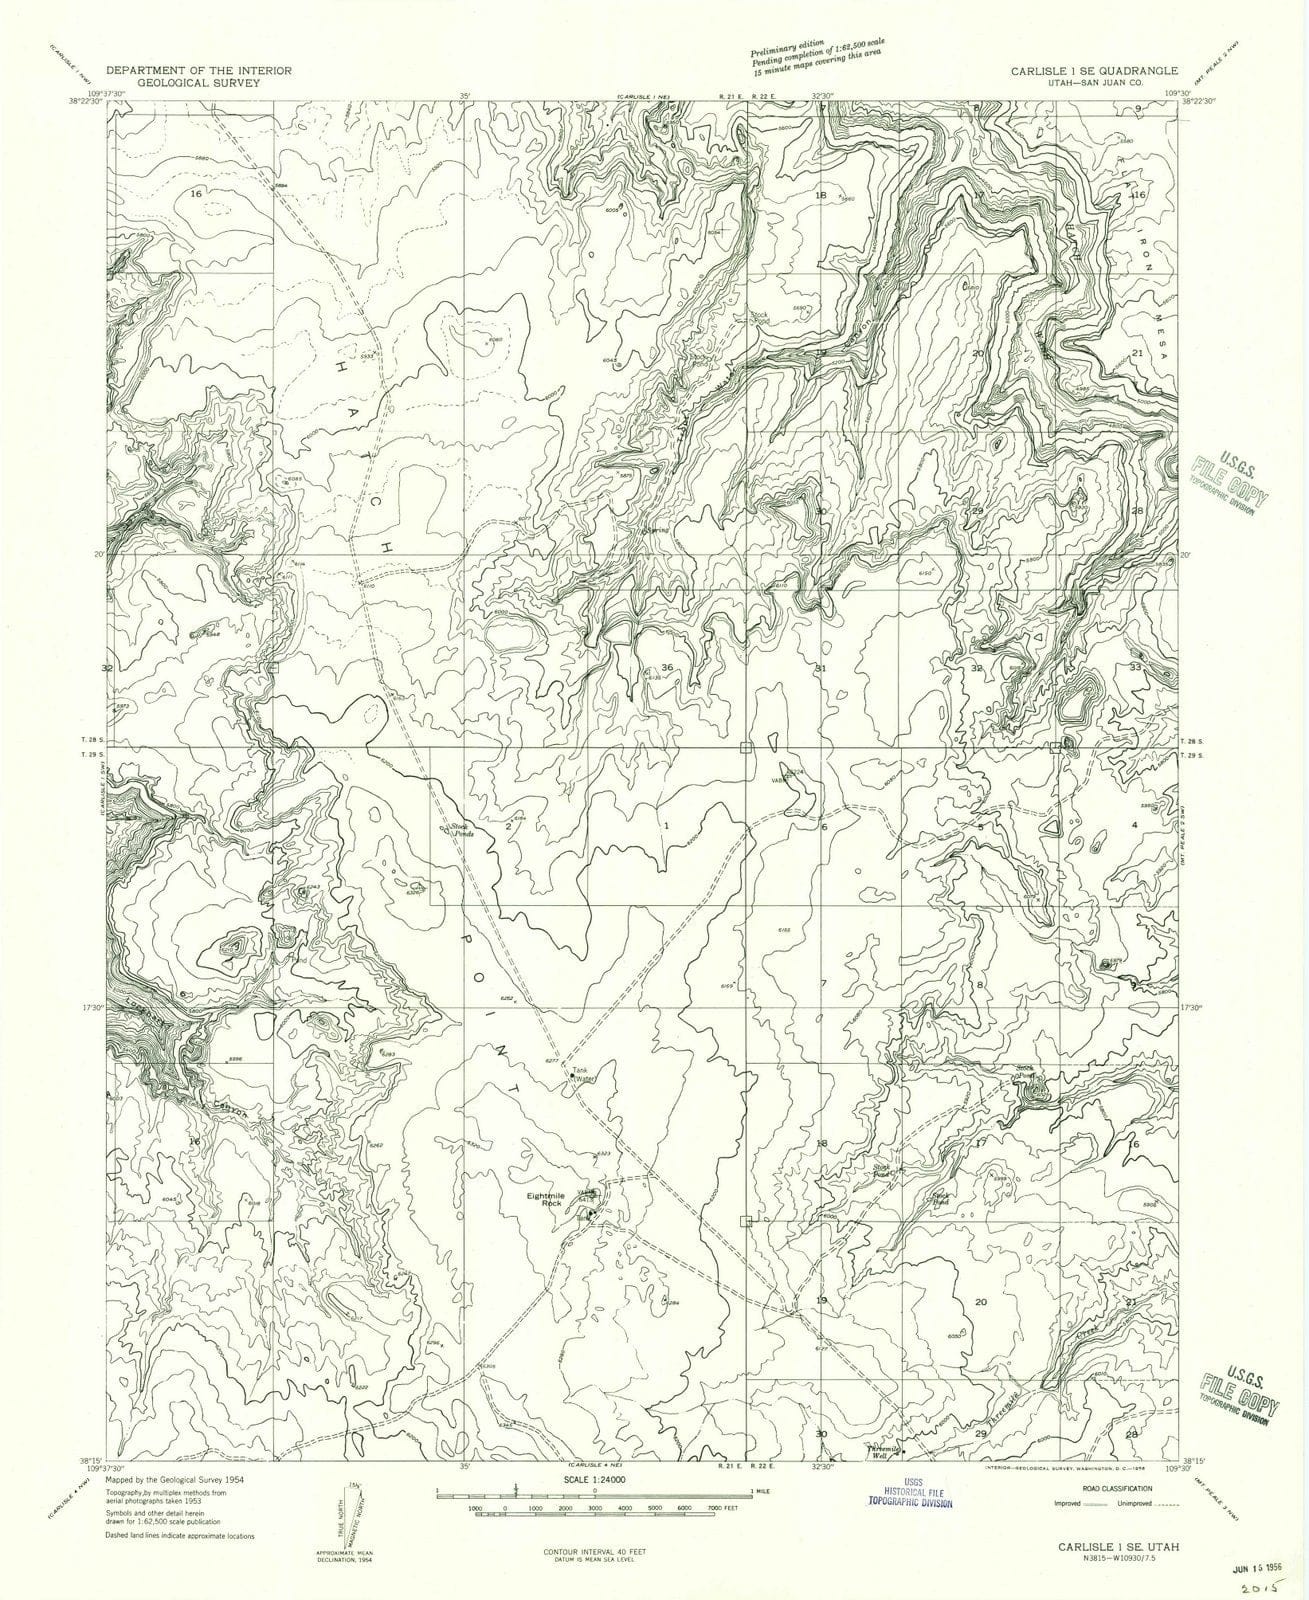 1954 Carlisle 1, UT - Utah - USGS Topographic Map v2